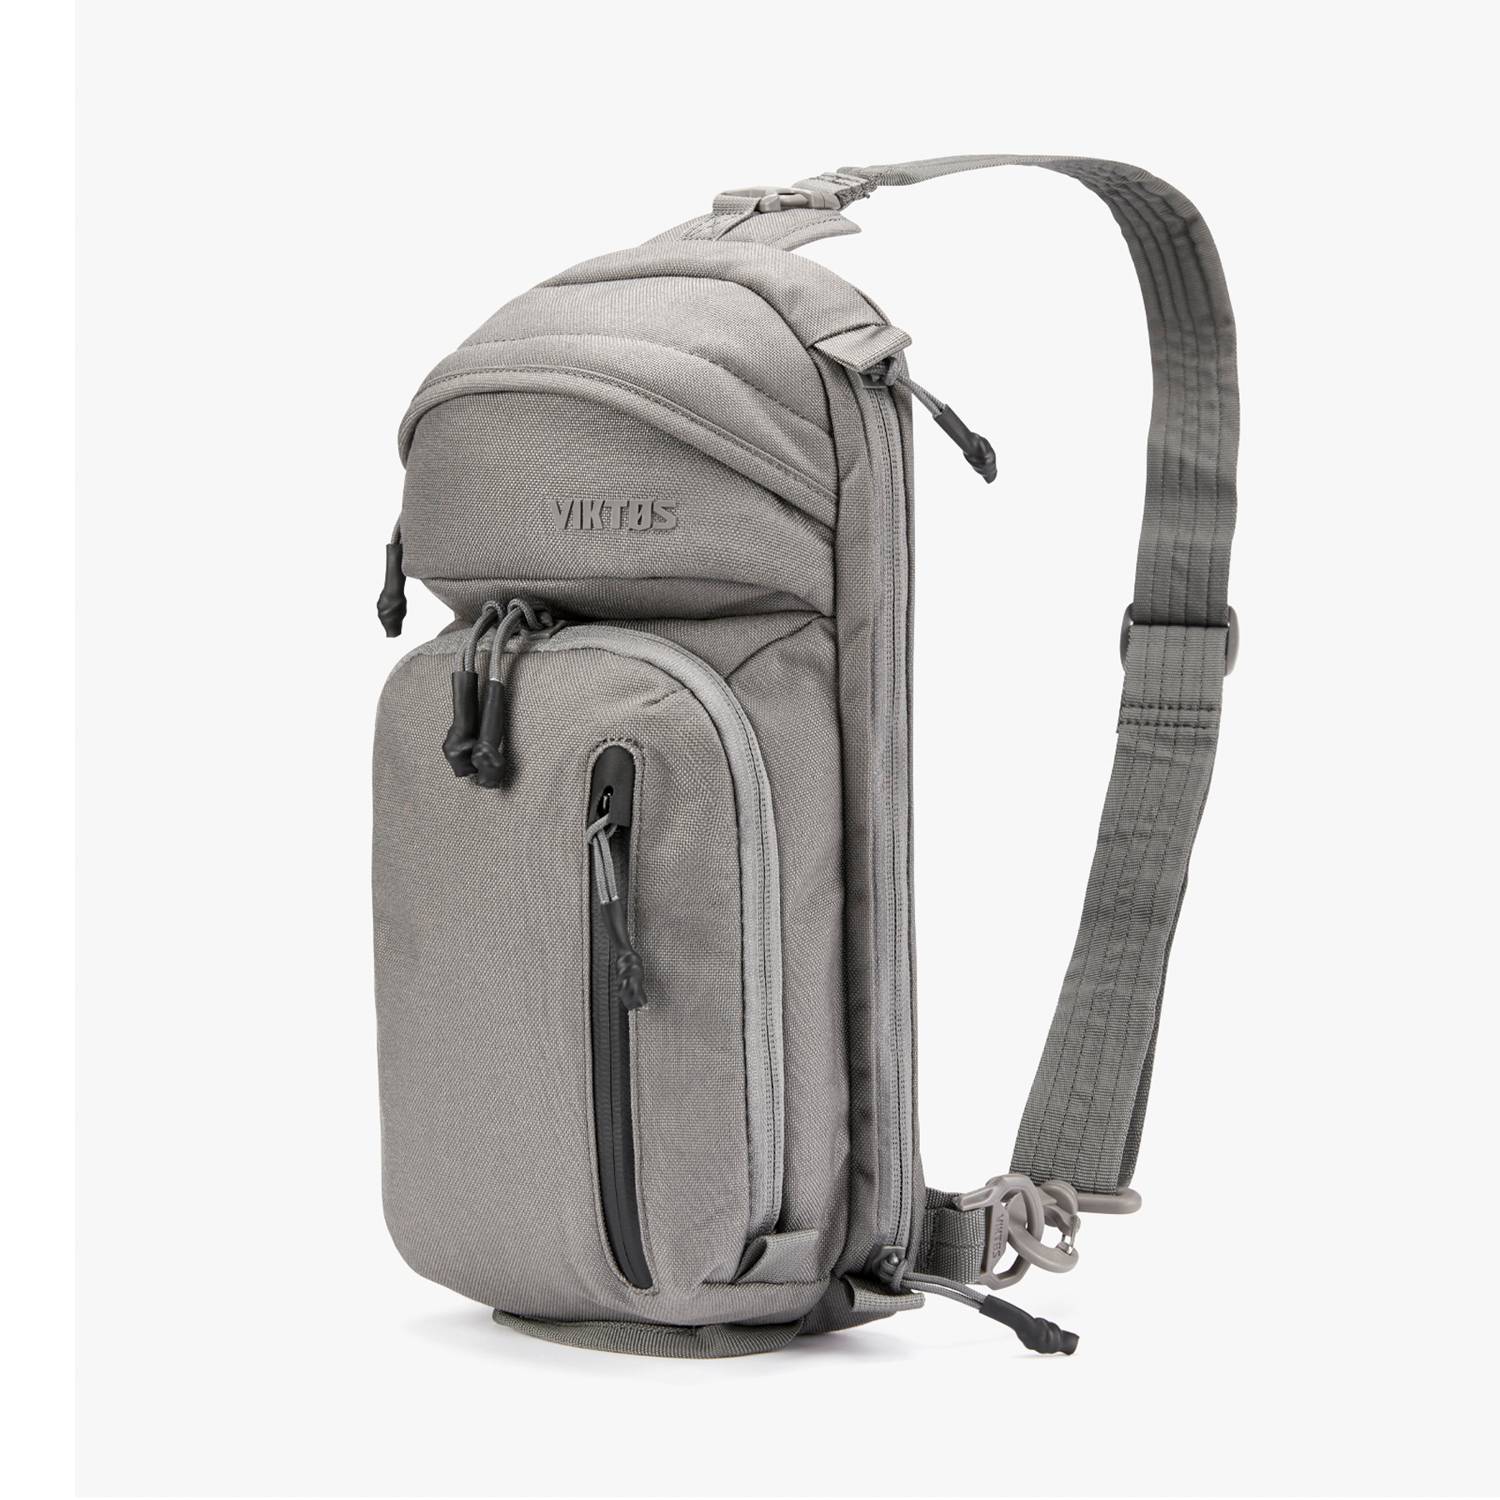 VIKTOS Upscale 2 Sling Bag | Sling Packs